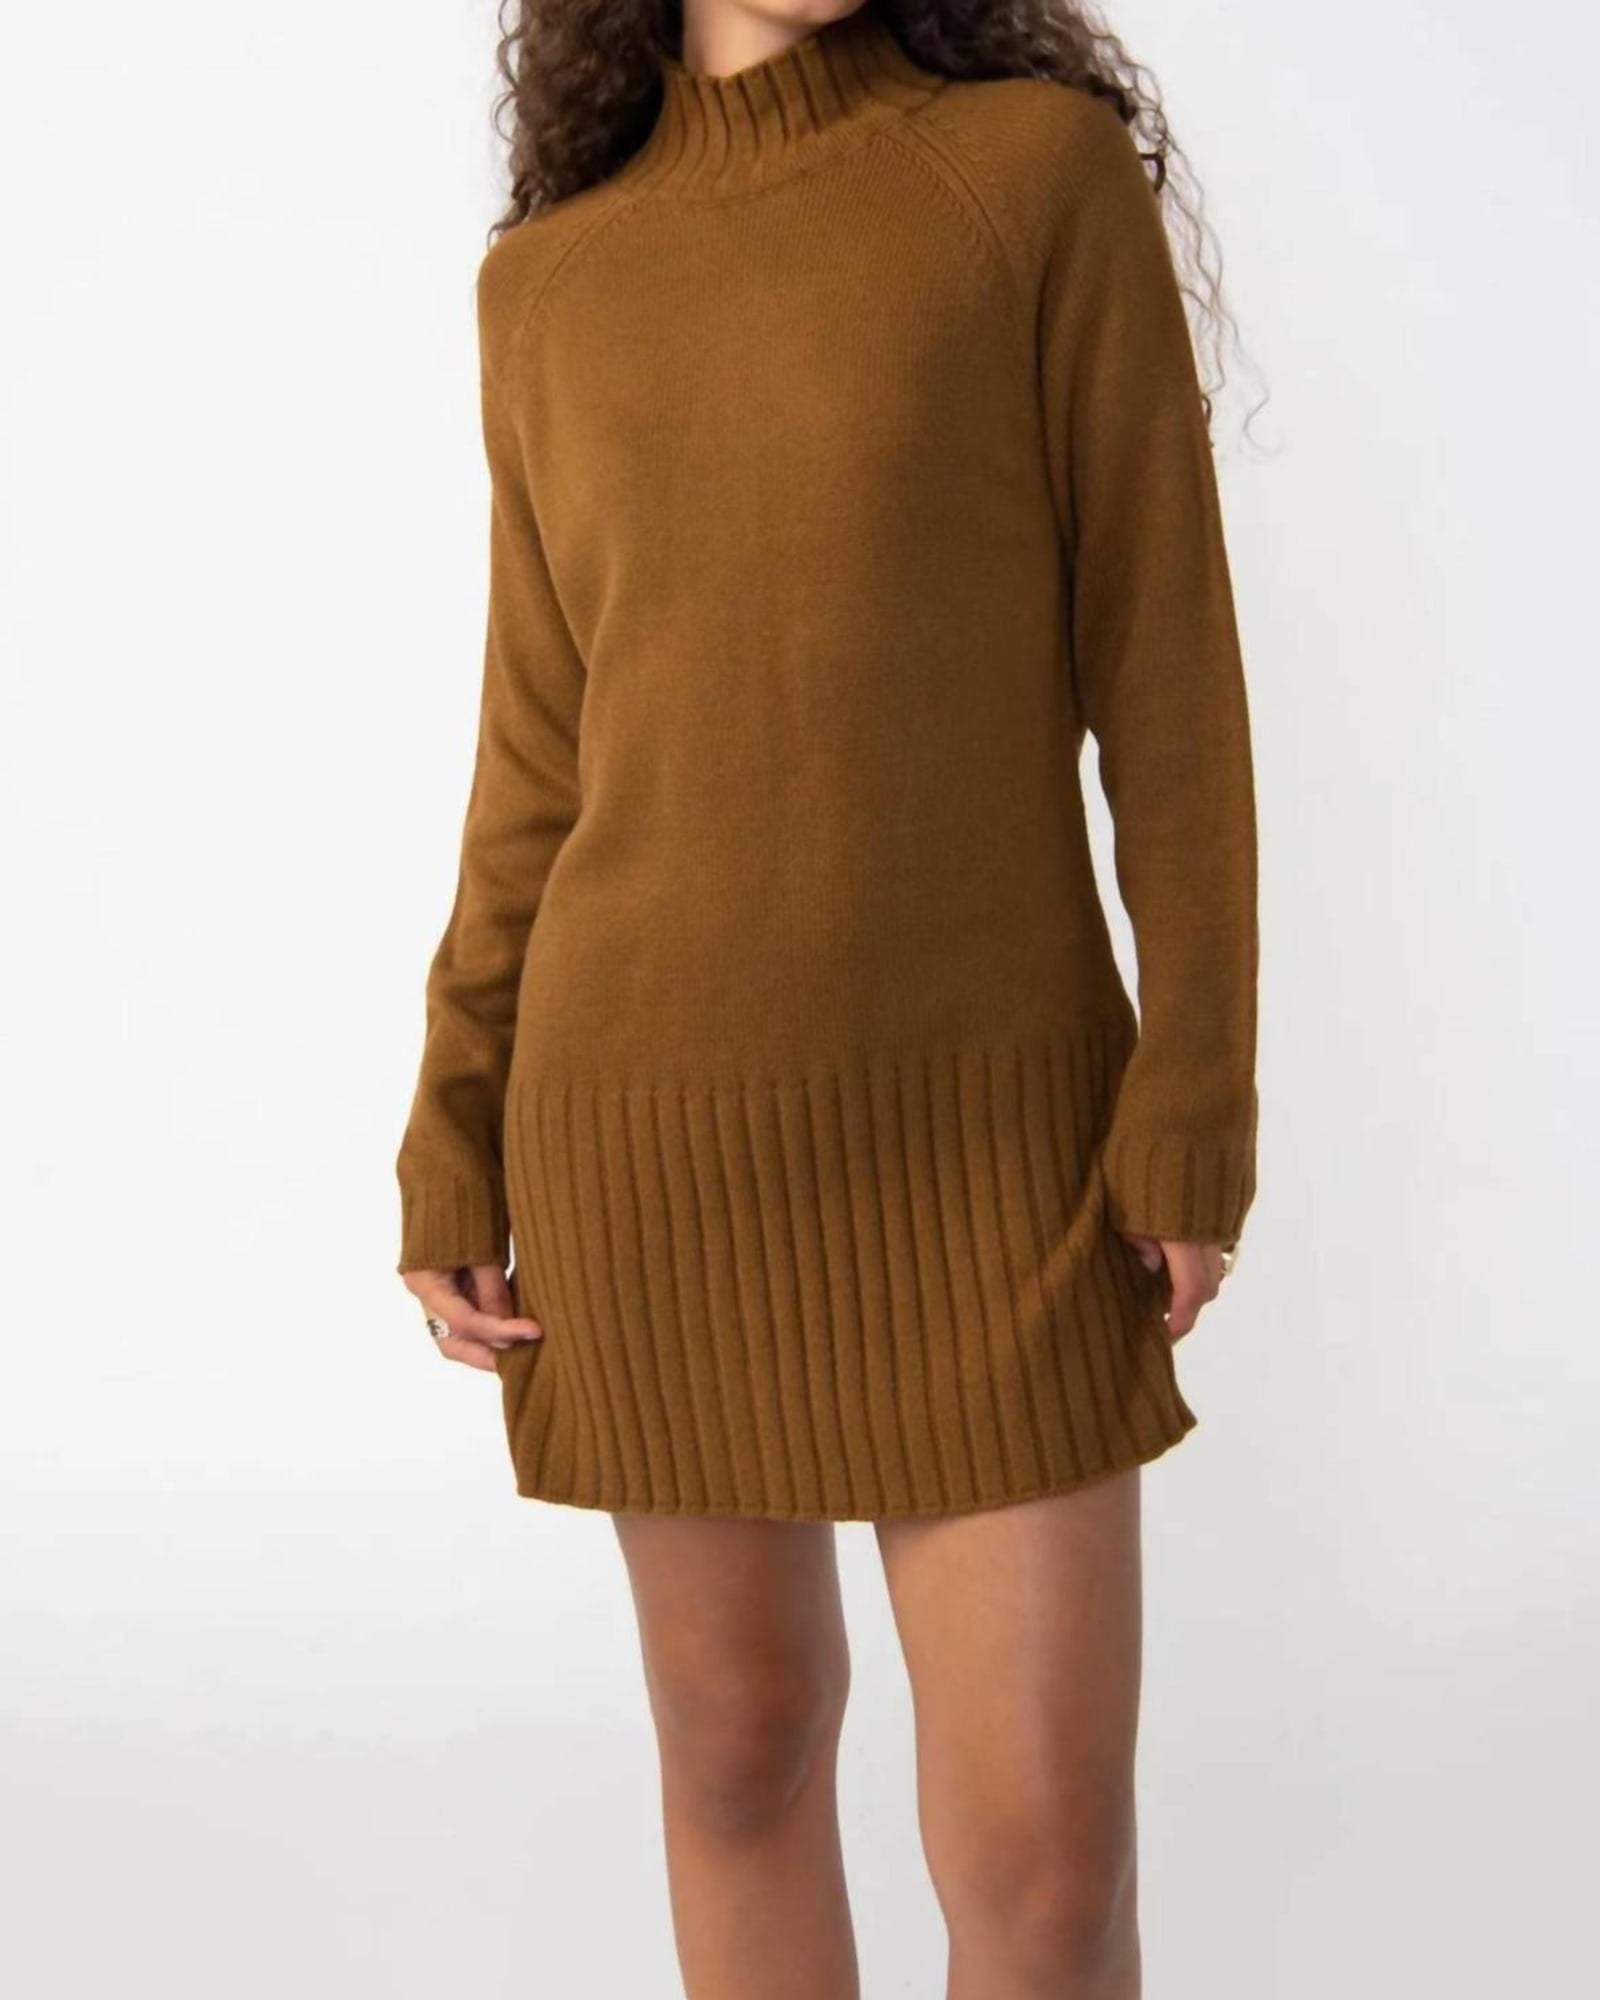 The Sweater Mini Dress in Spice | Spice